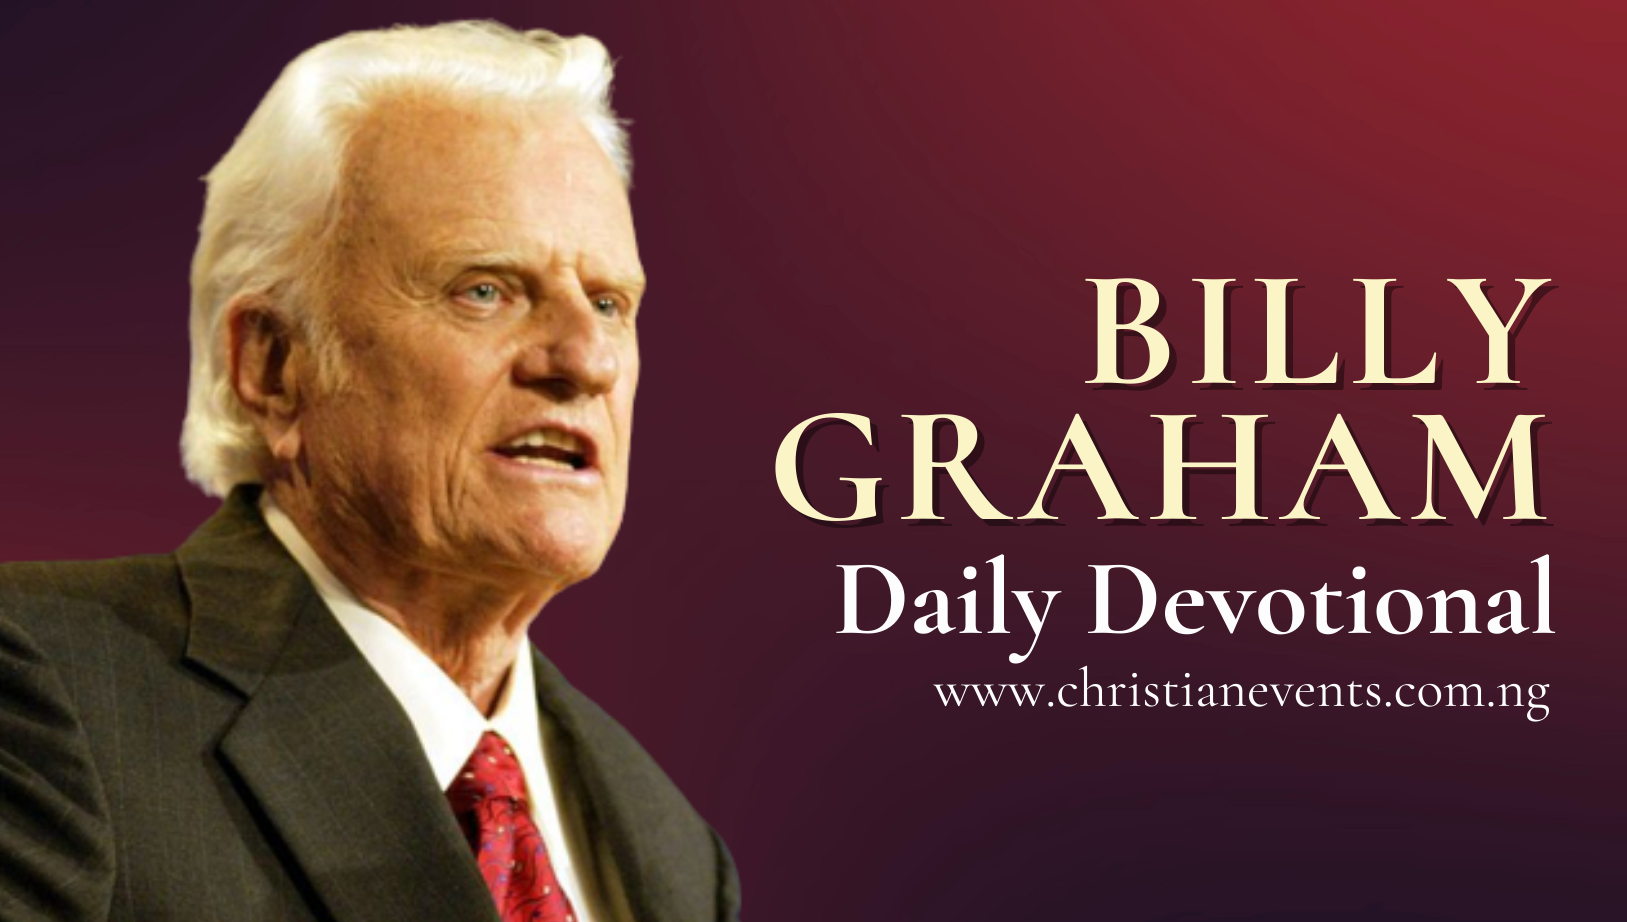 Billy Graham Daily Devotional E1675166011372 